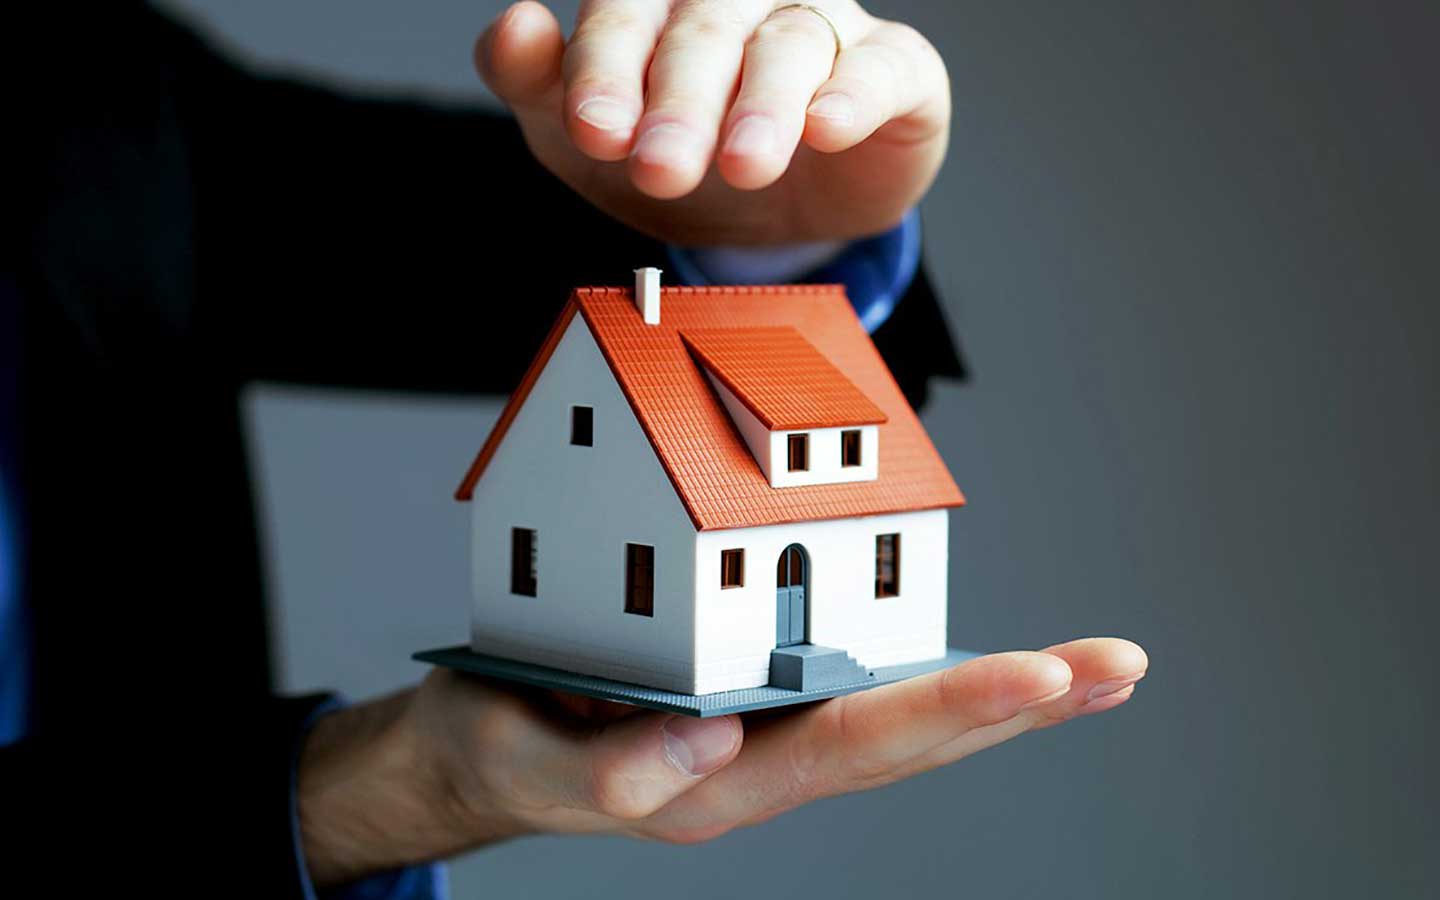 property insurance, civil liability